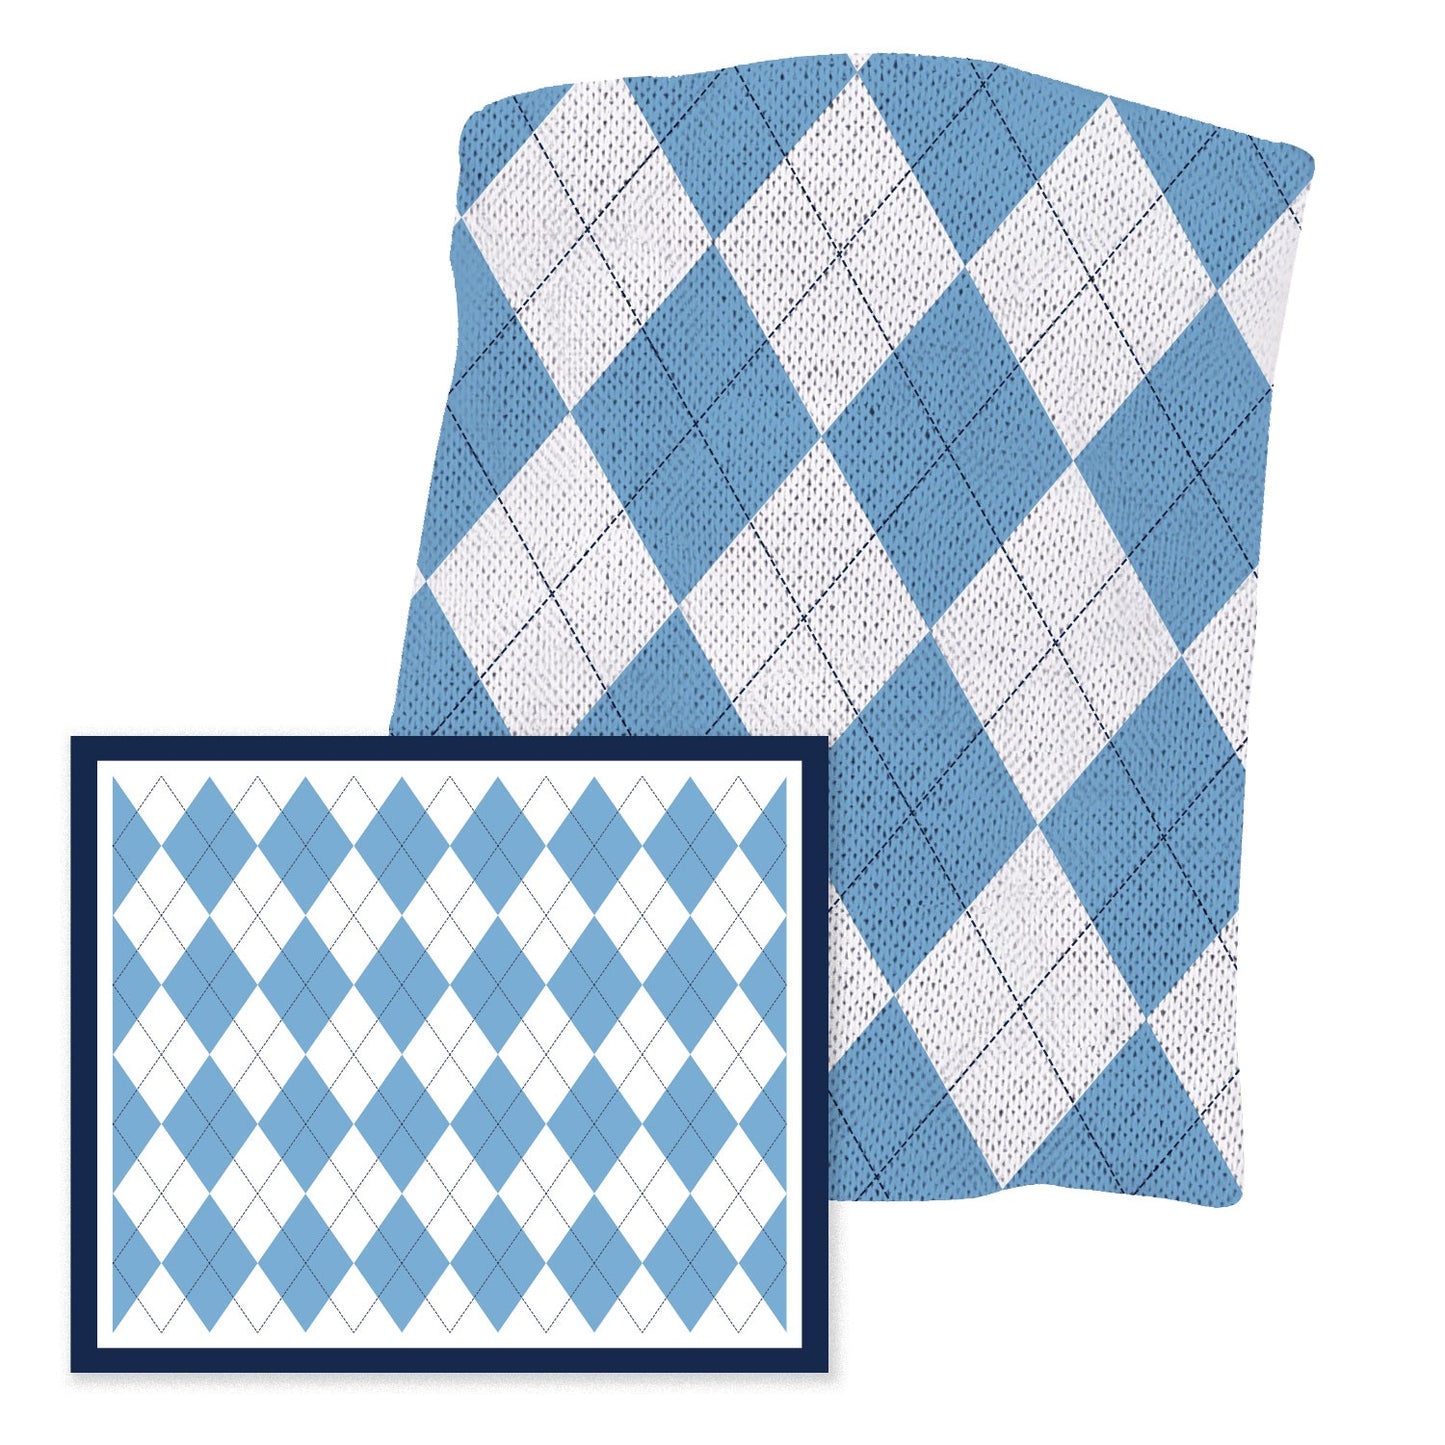 Carolina Blue and Navy Argyle Print Knit Blanket